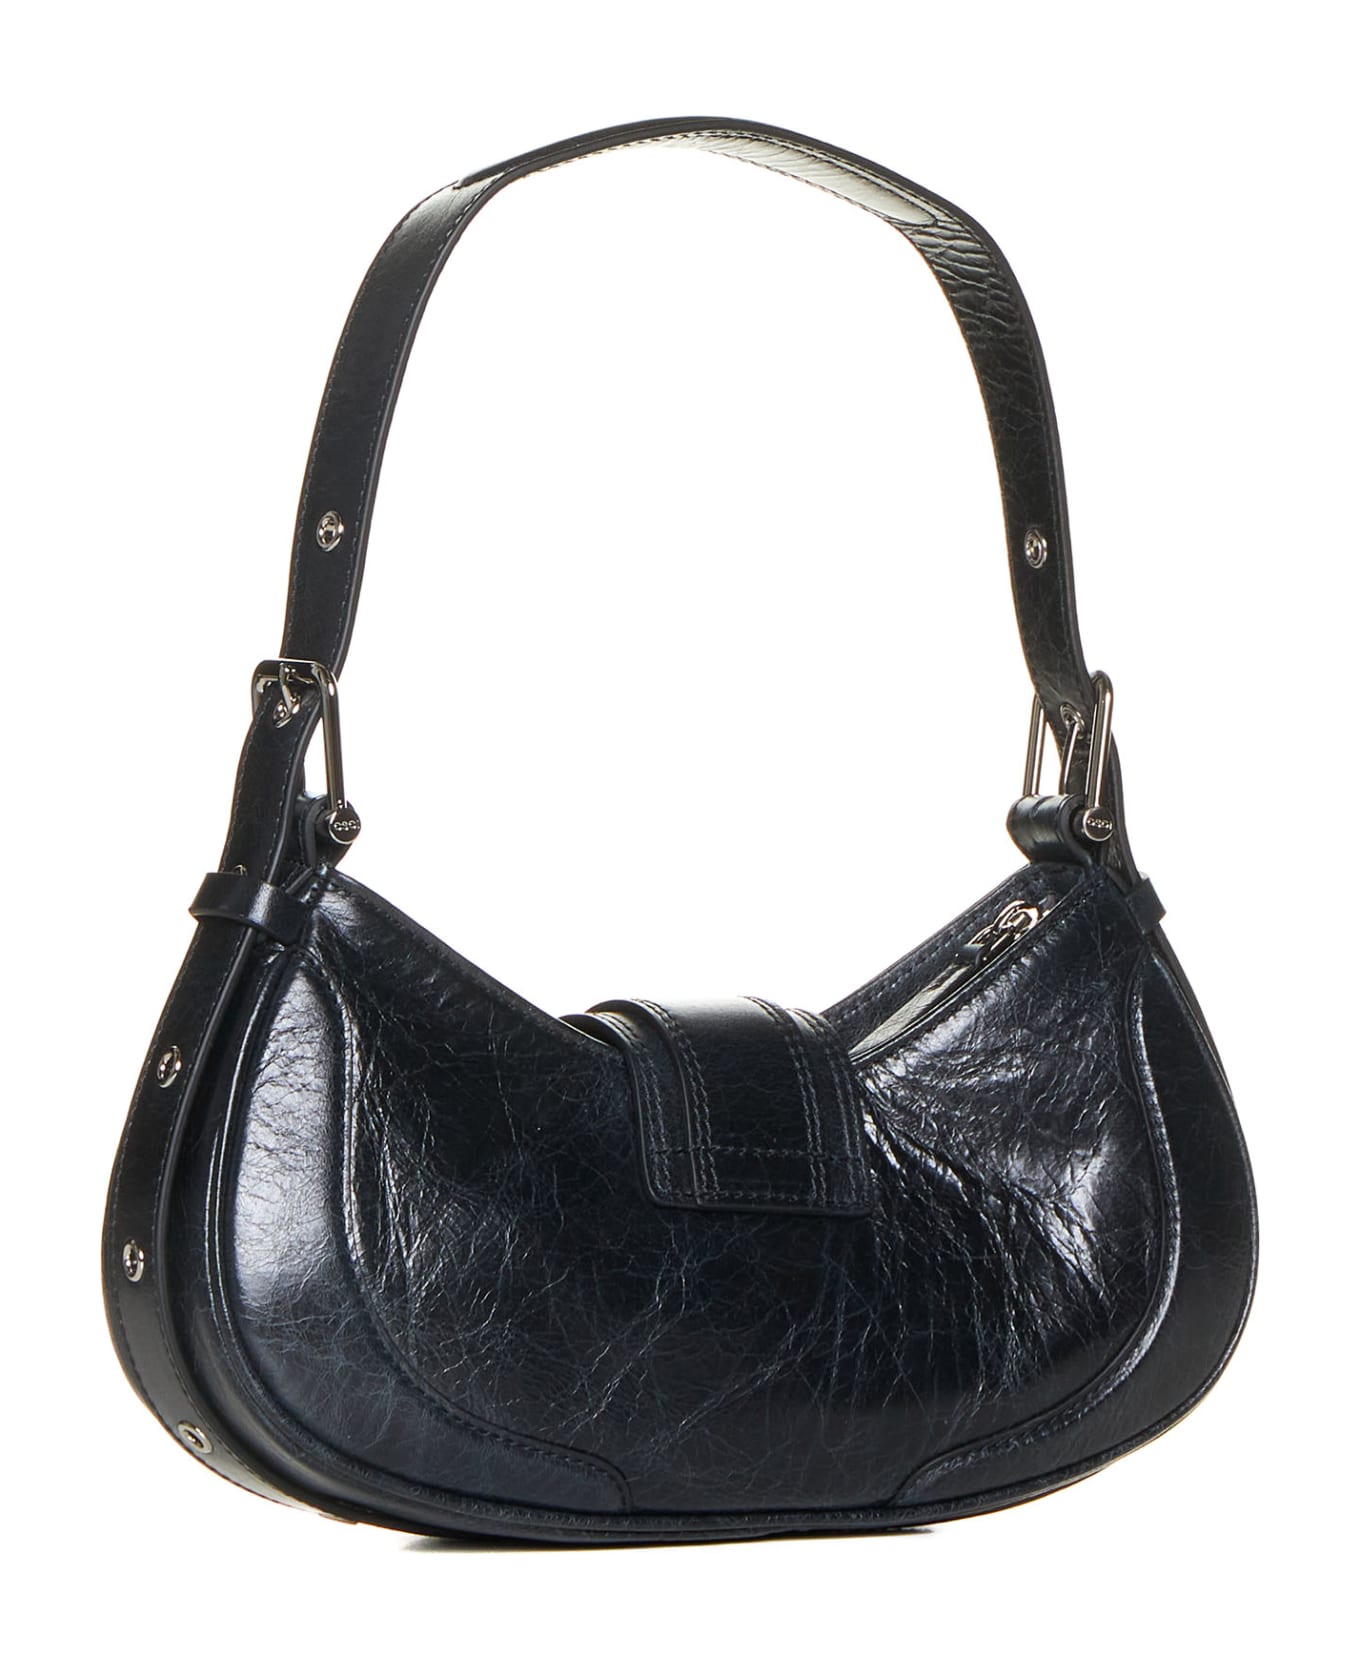 OSOI Shoulder Bag - Catena black